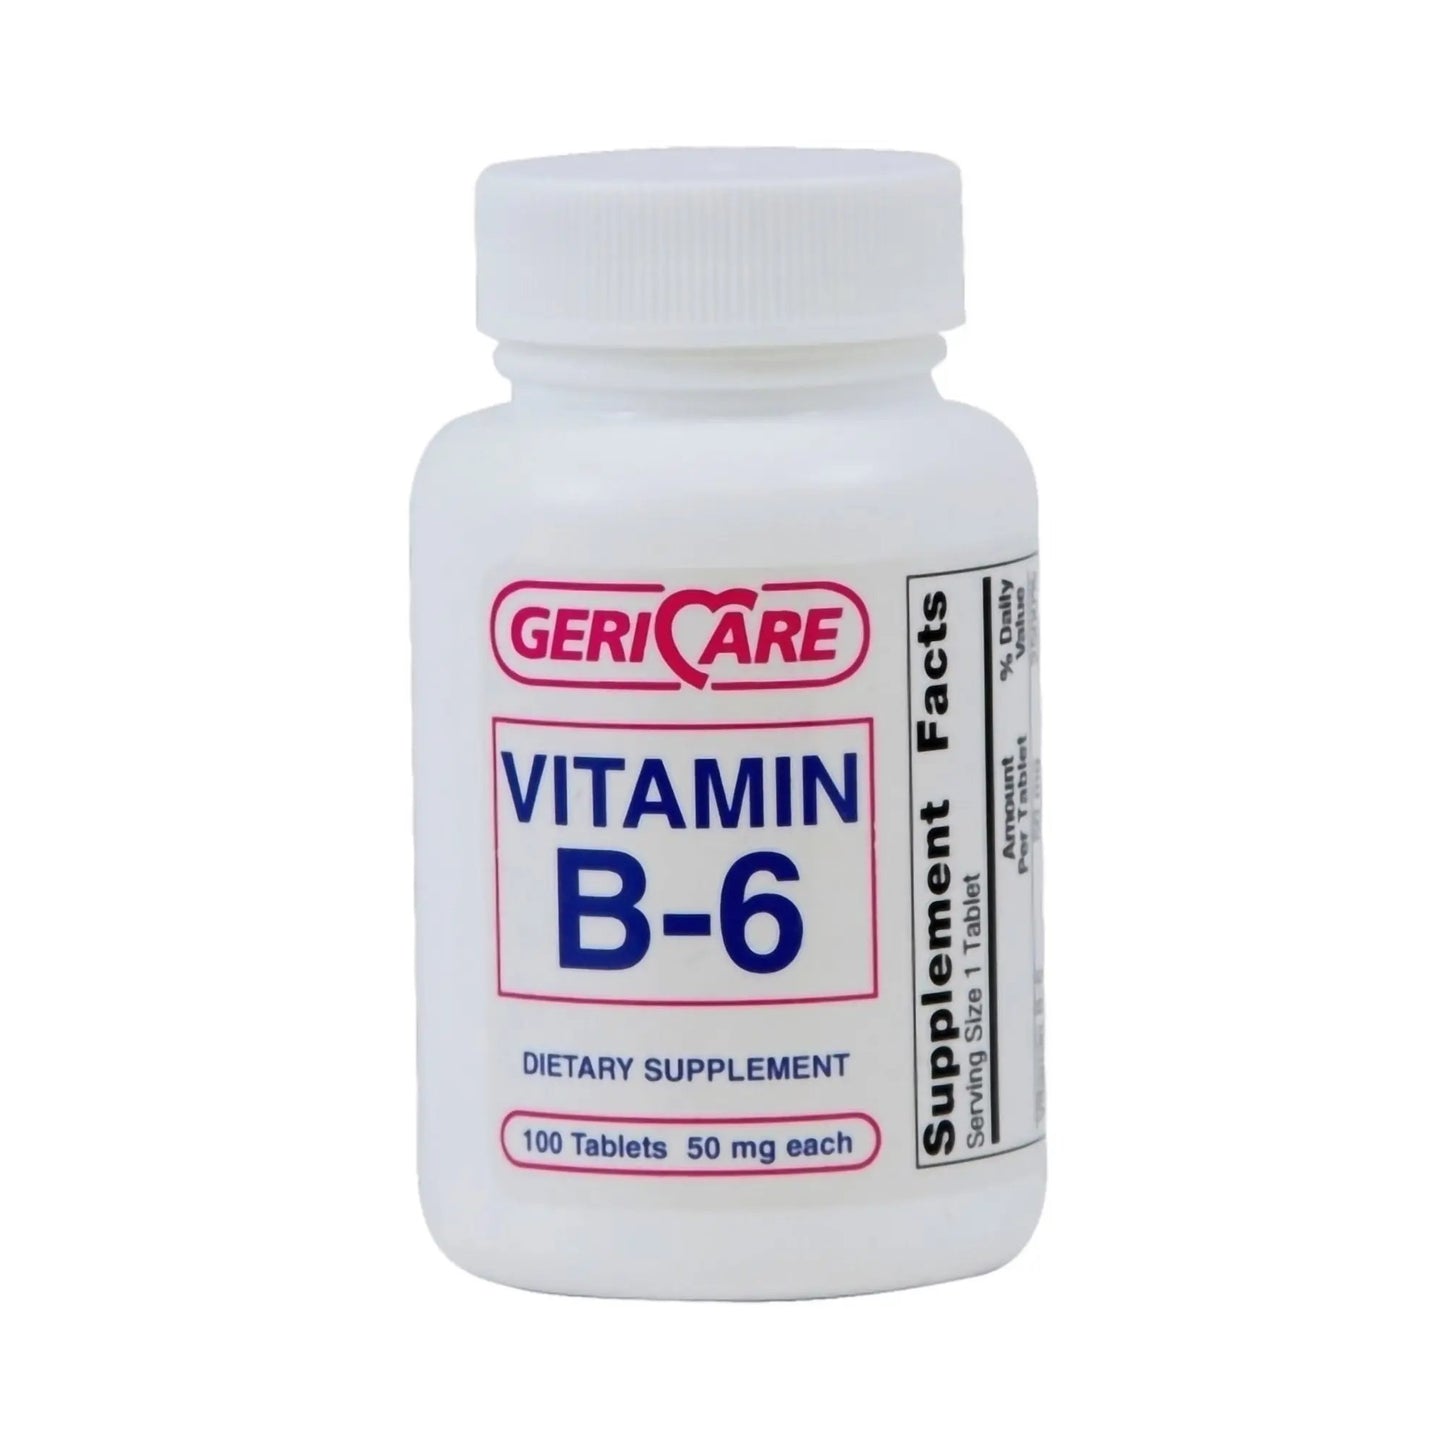 Geri-Care Vitamin B6 Supplement, 100 Tablets per Bottle